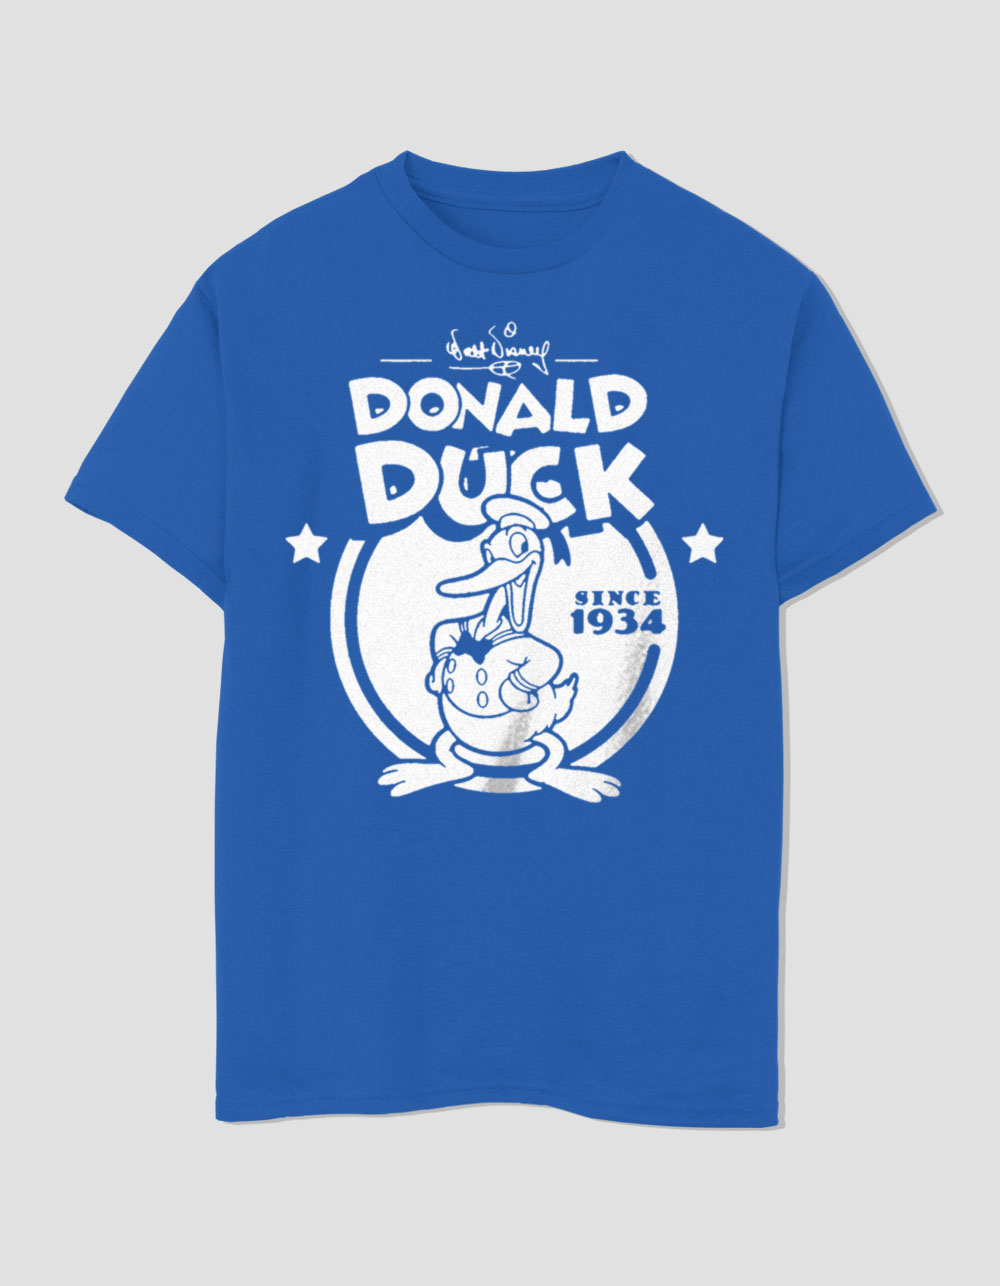 DISNEY 100TH ANNIVERSARY Since '34 Donald Duck Unisex Kids Tee - ROYAL |  Tillys